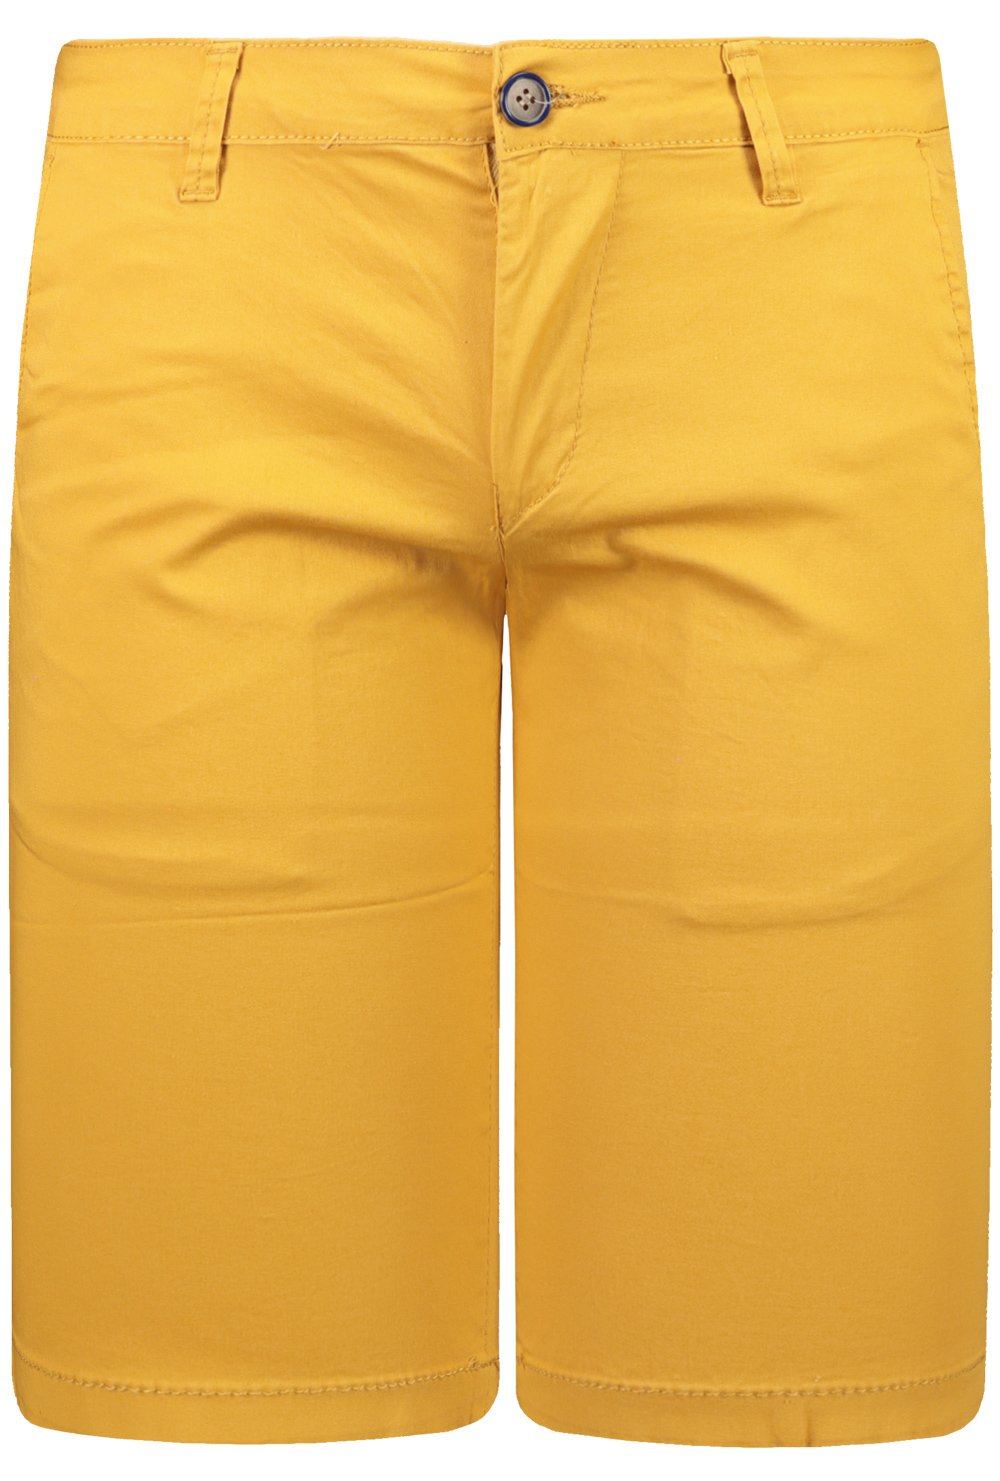 Yellow men's shorts